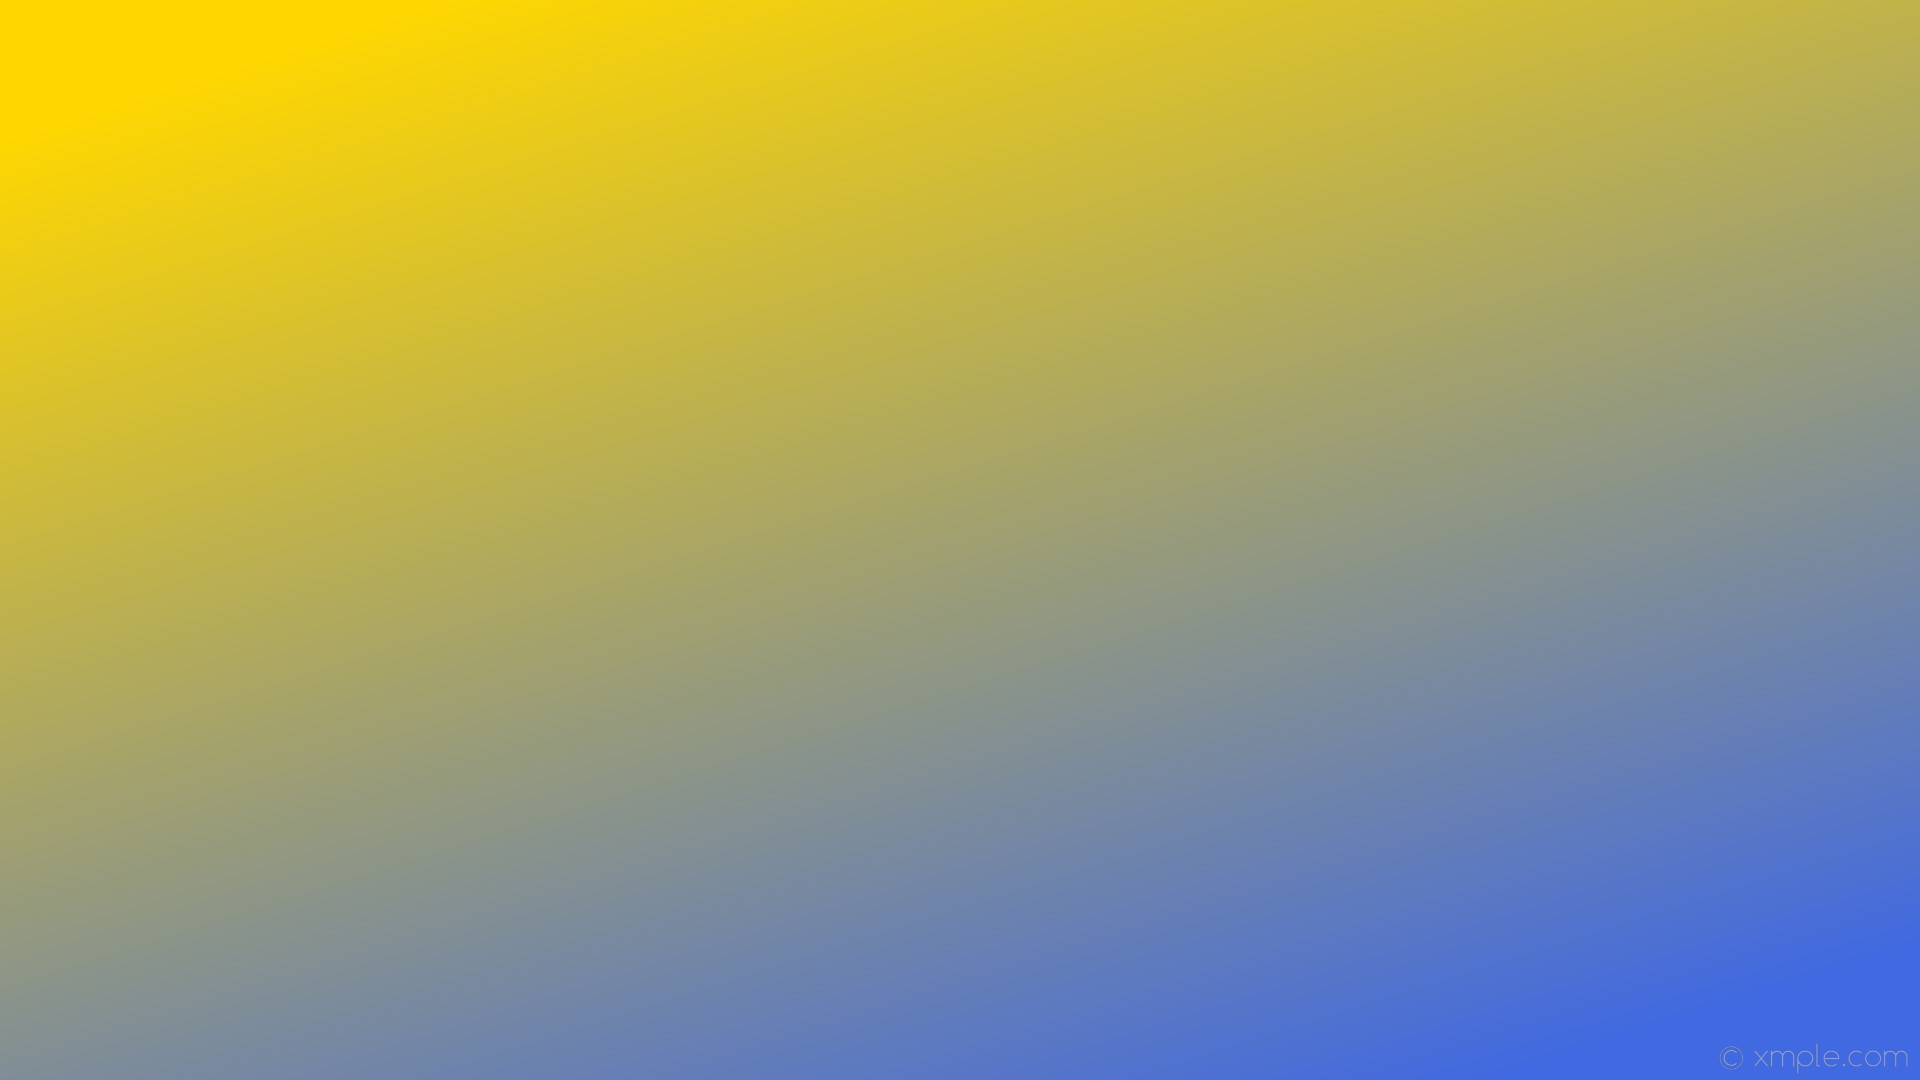 1920x1080 wallpaper yellow gradient linear blue gold royal blue #ffd700 #4169e1 135Â°